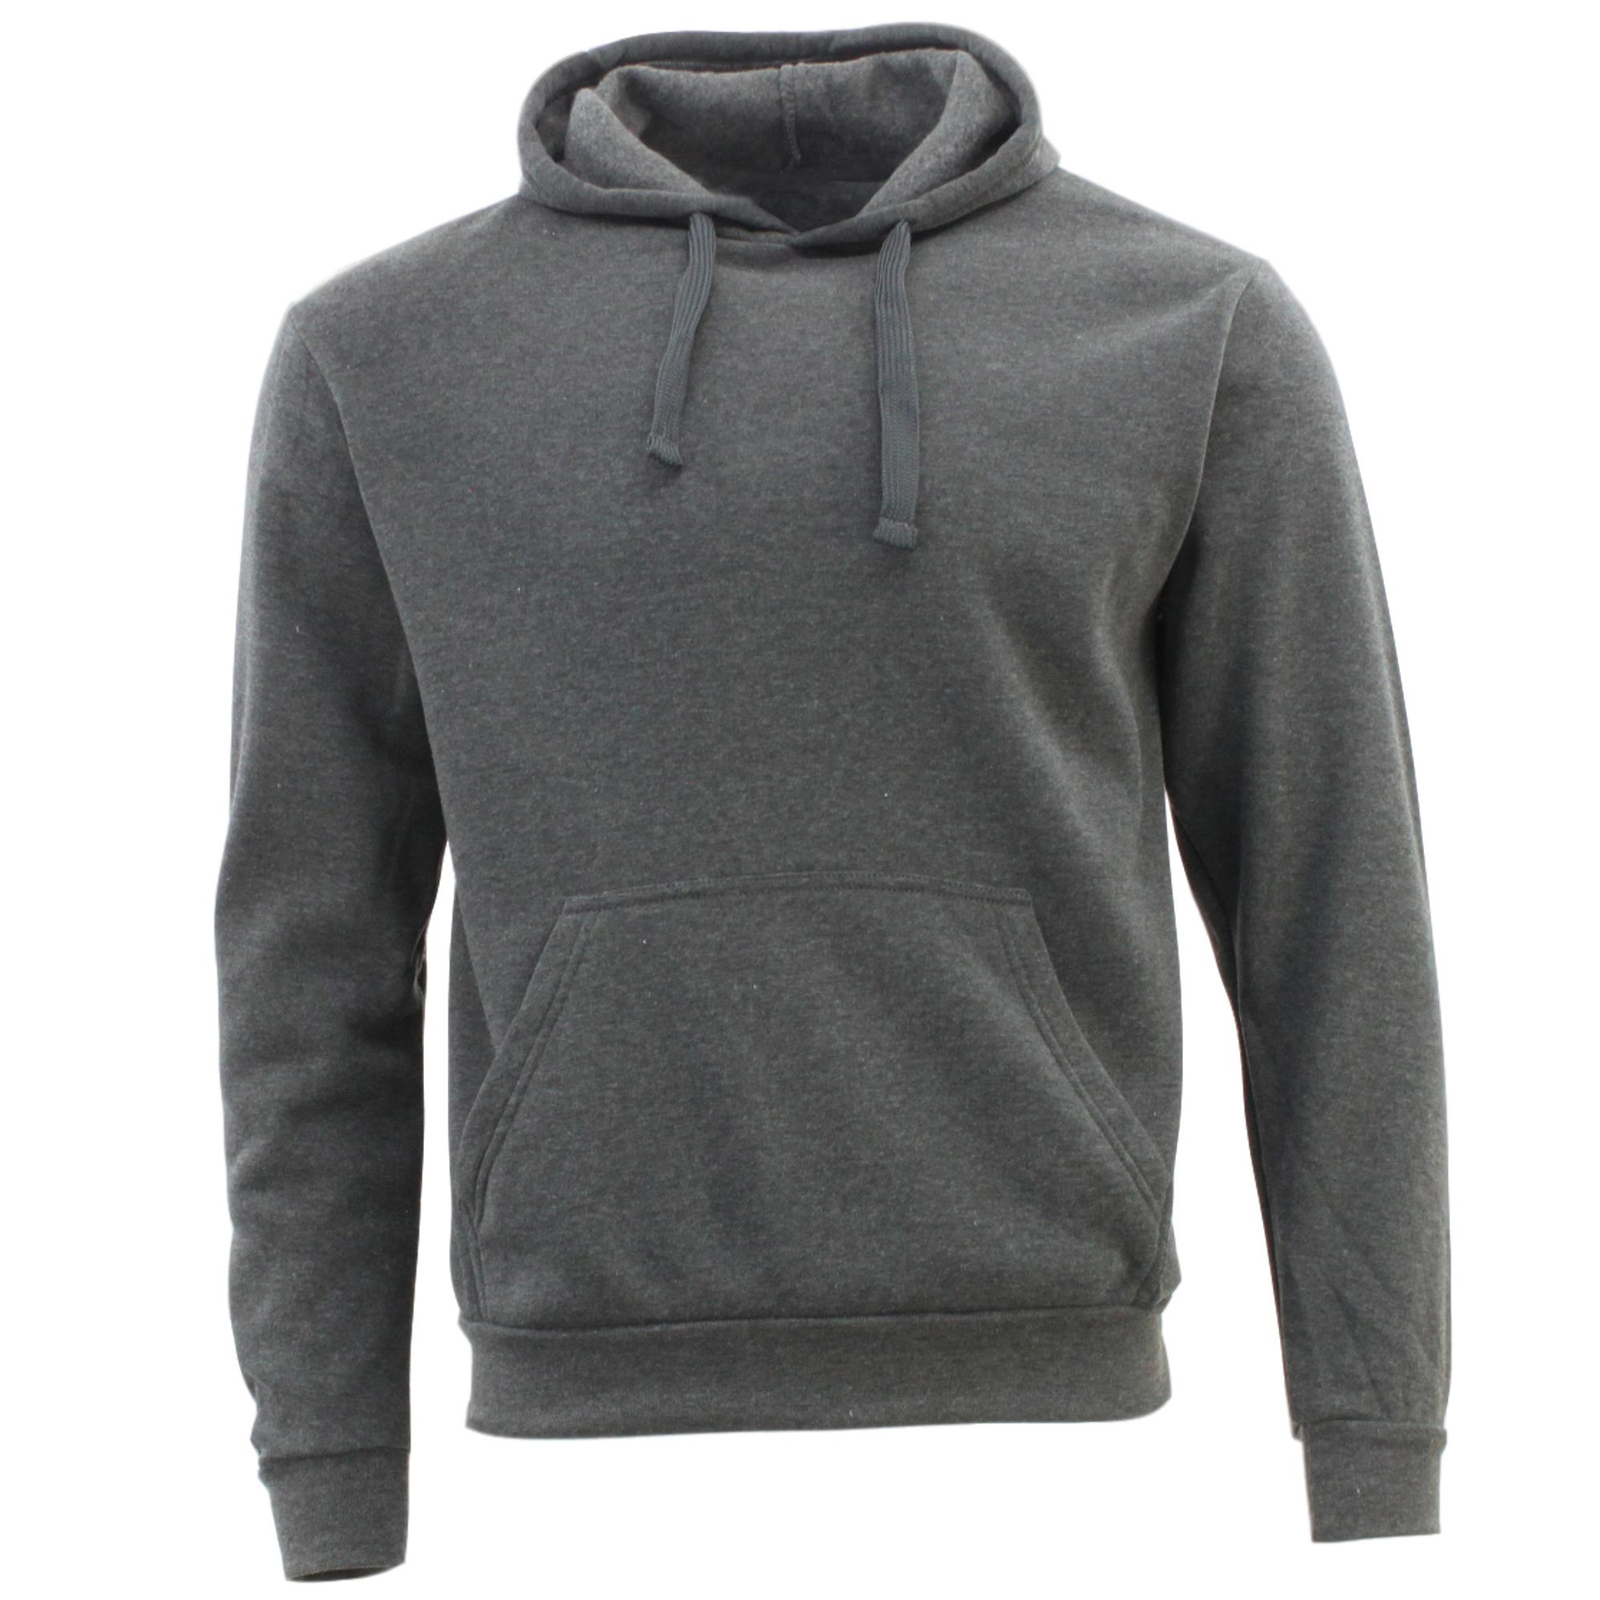 Adult Men's Unisex Basic Plain Hoodie Jumper Pullover Sweater ...